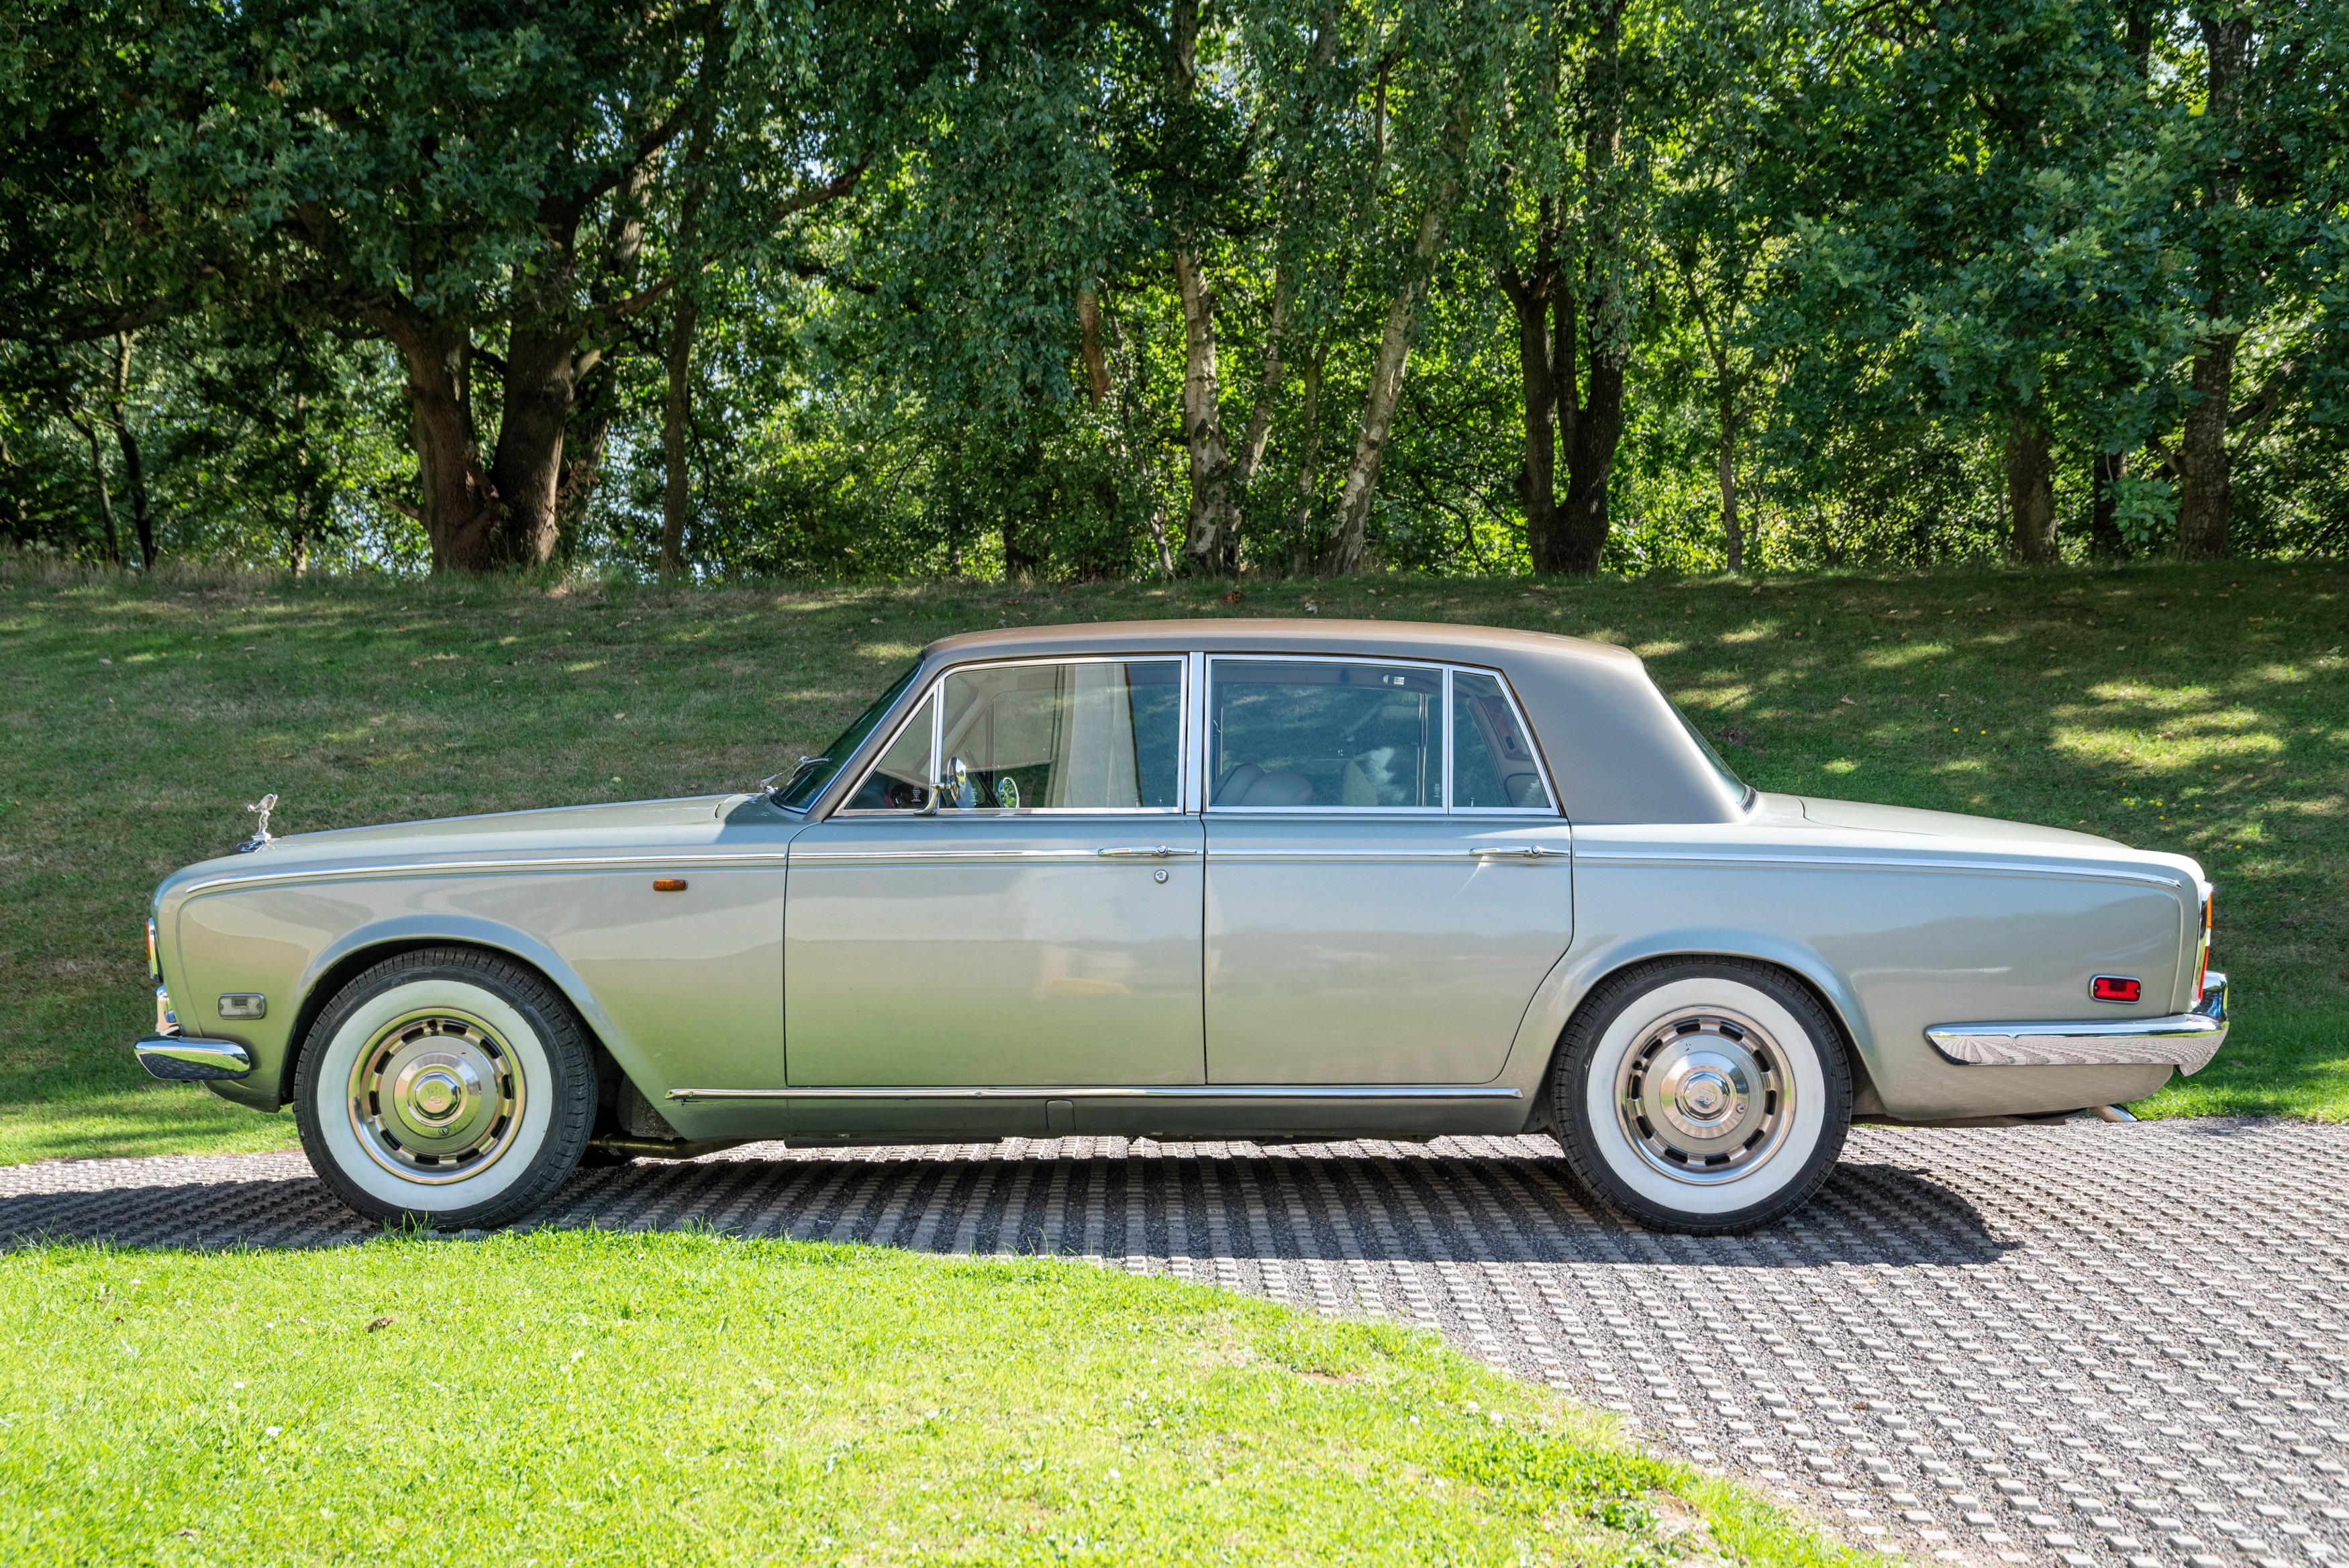 1960 RollsRoyce Silver Cloud II  Paradise Garage  Service and Parts for Rolls  Royce Bentley Jaguar and Aston Martin